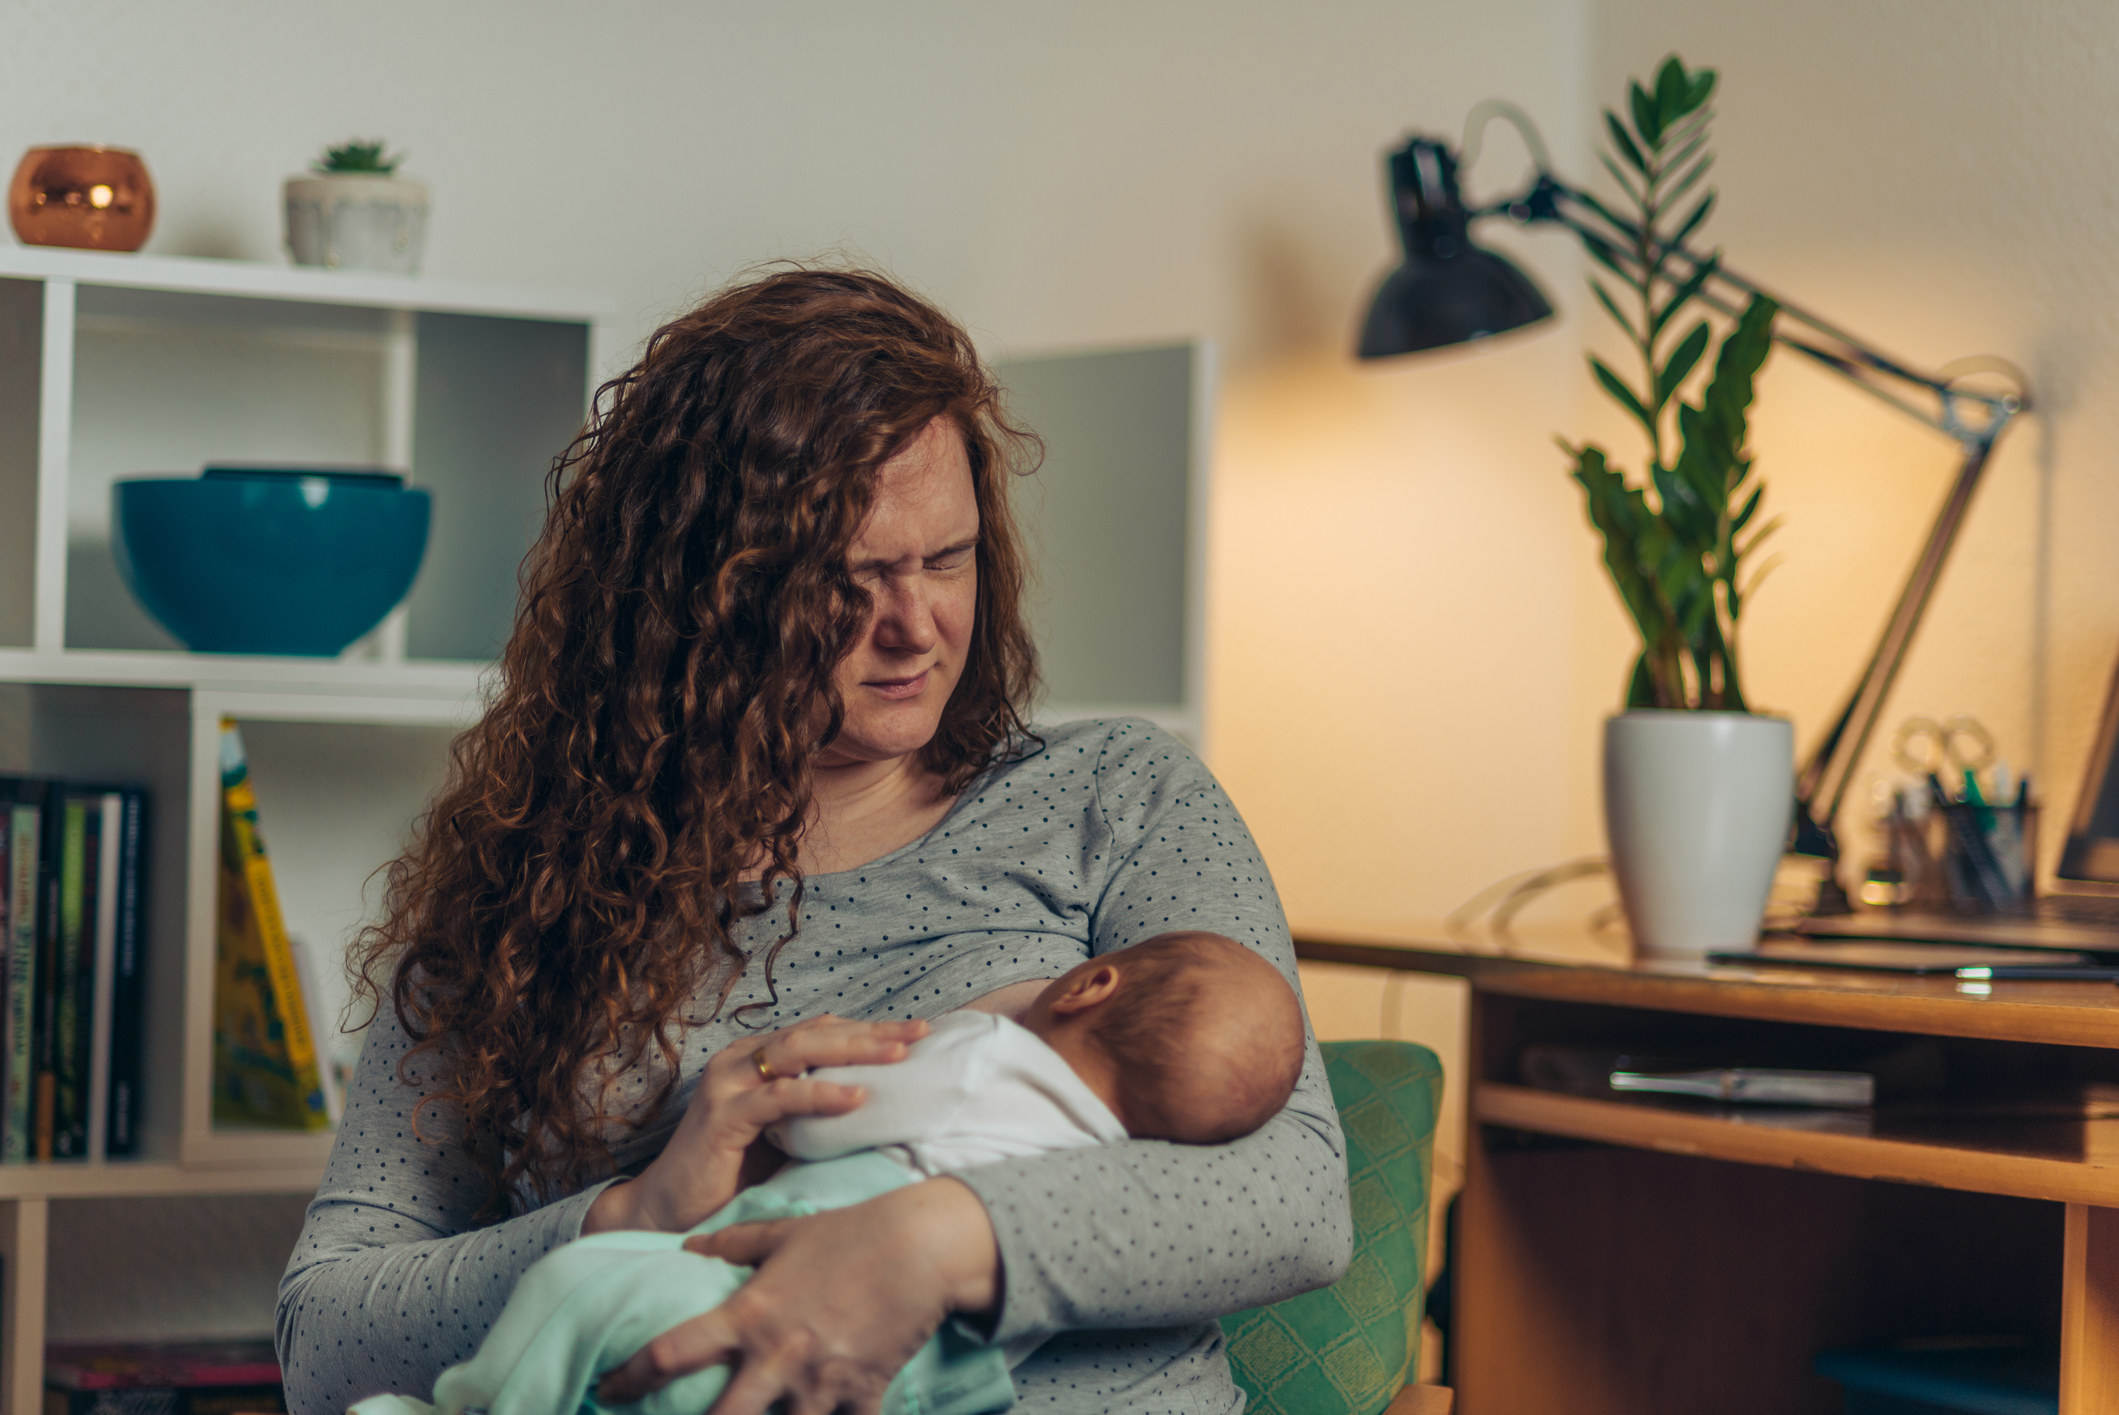 A woman breastfeeding in pain